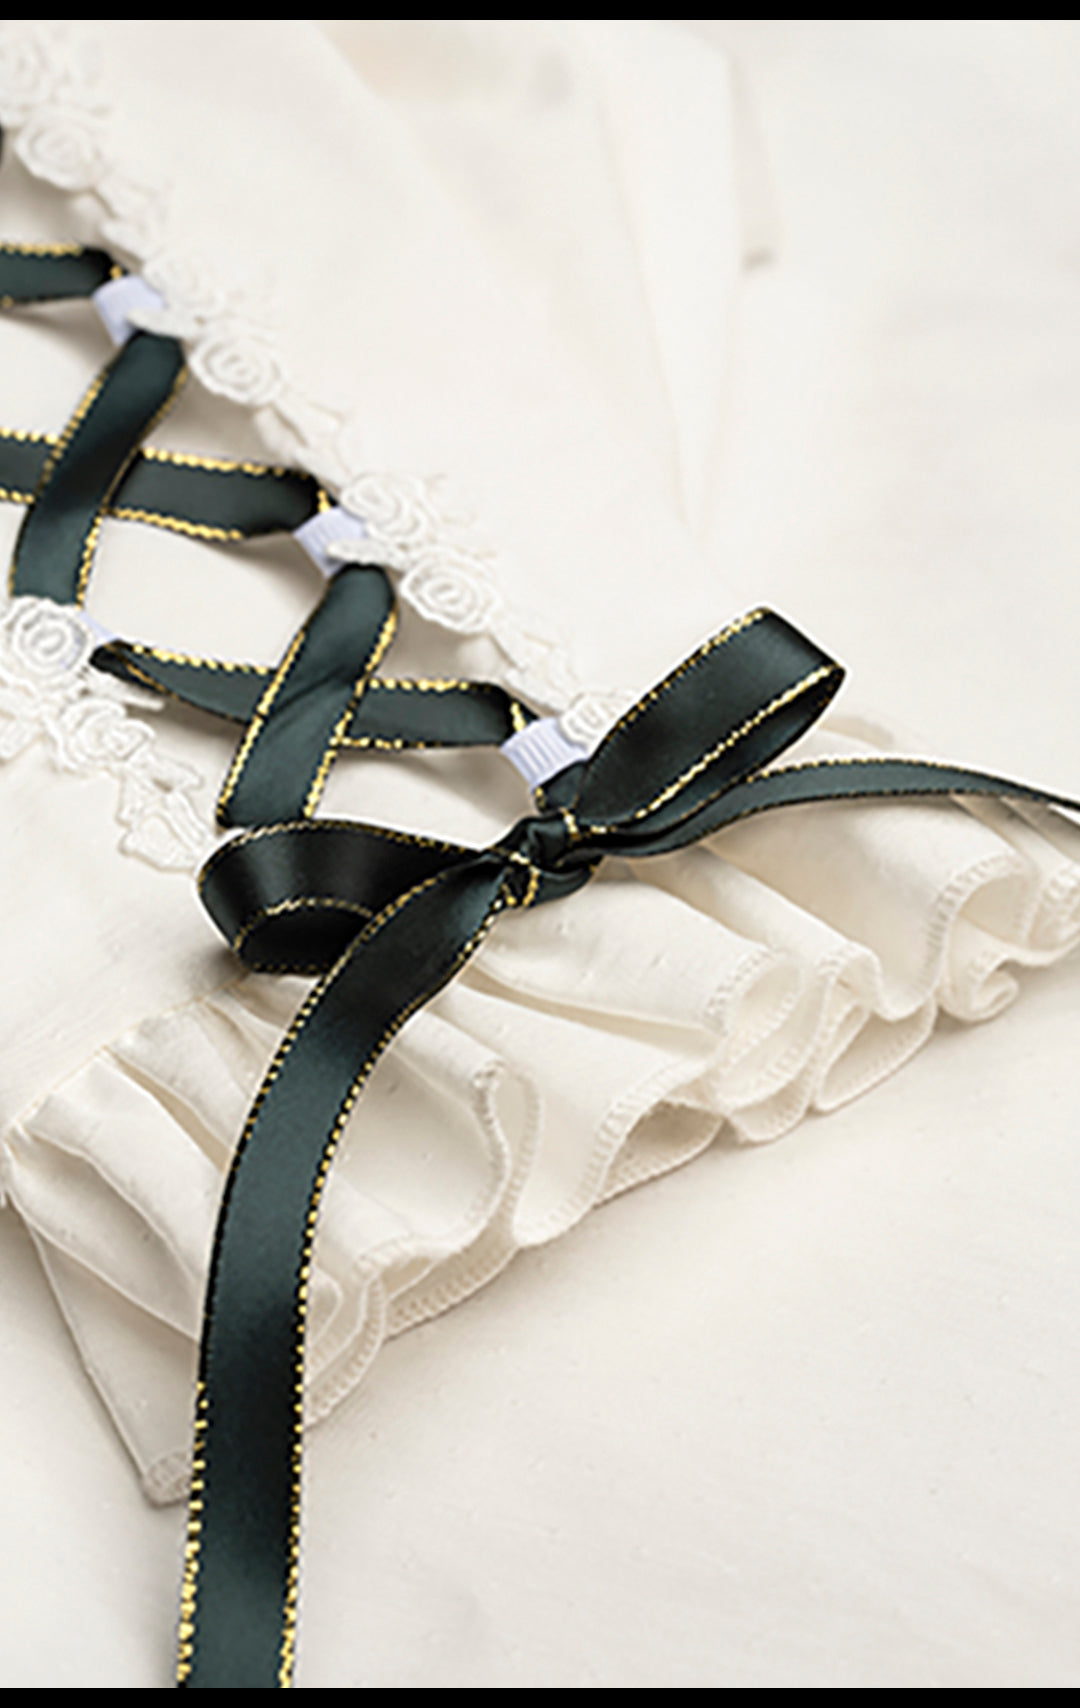 JSK Set♥Ready to Ship♥Leicester Christmas♥Sweet Lolita Dress